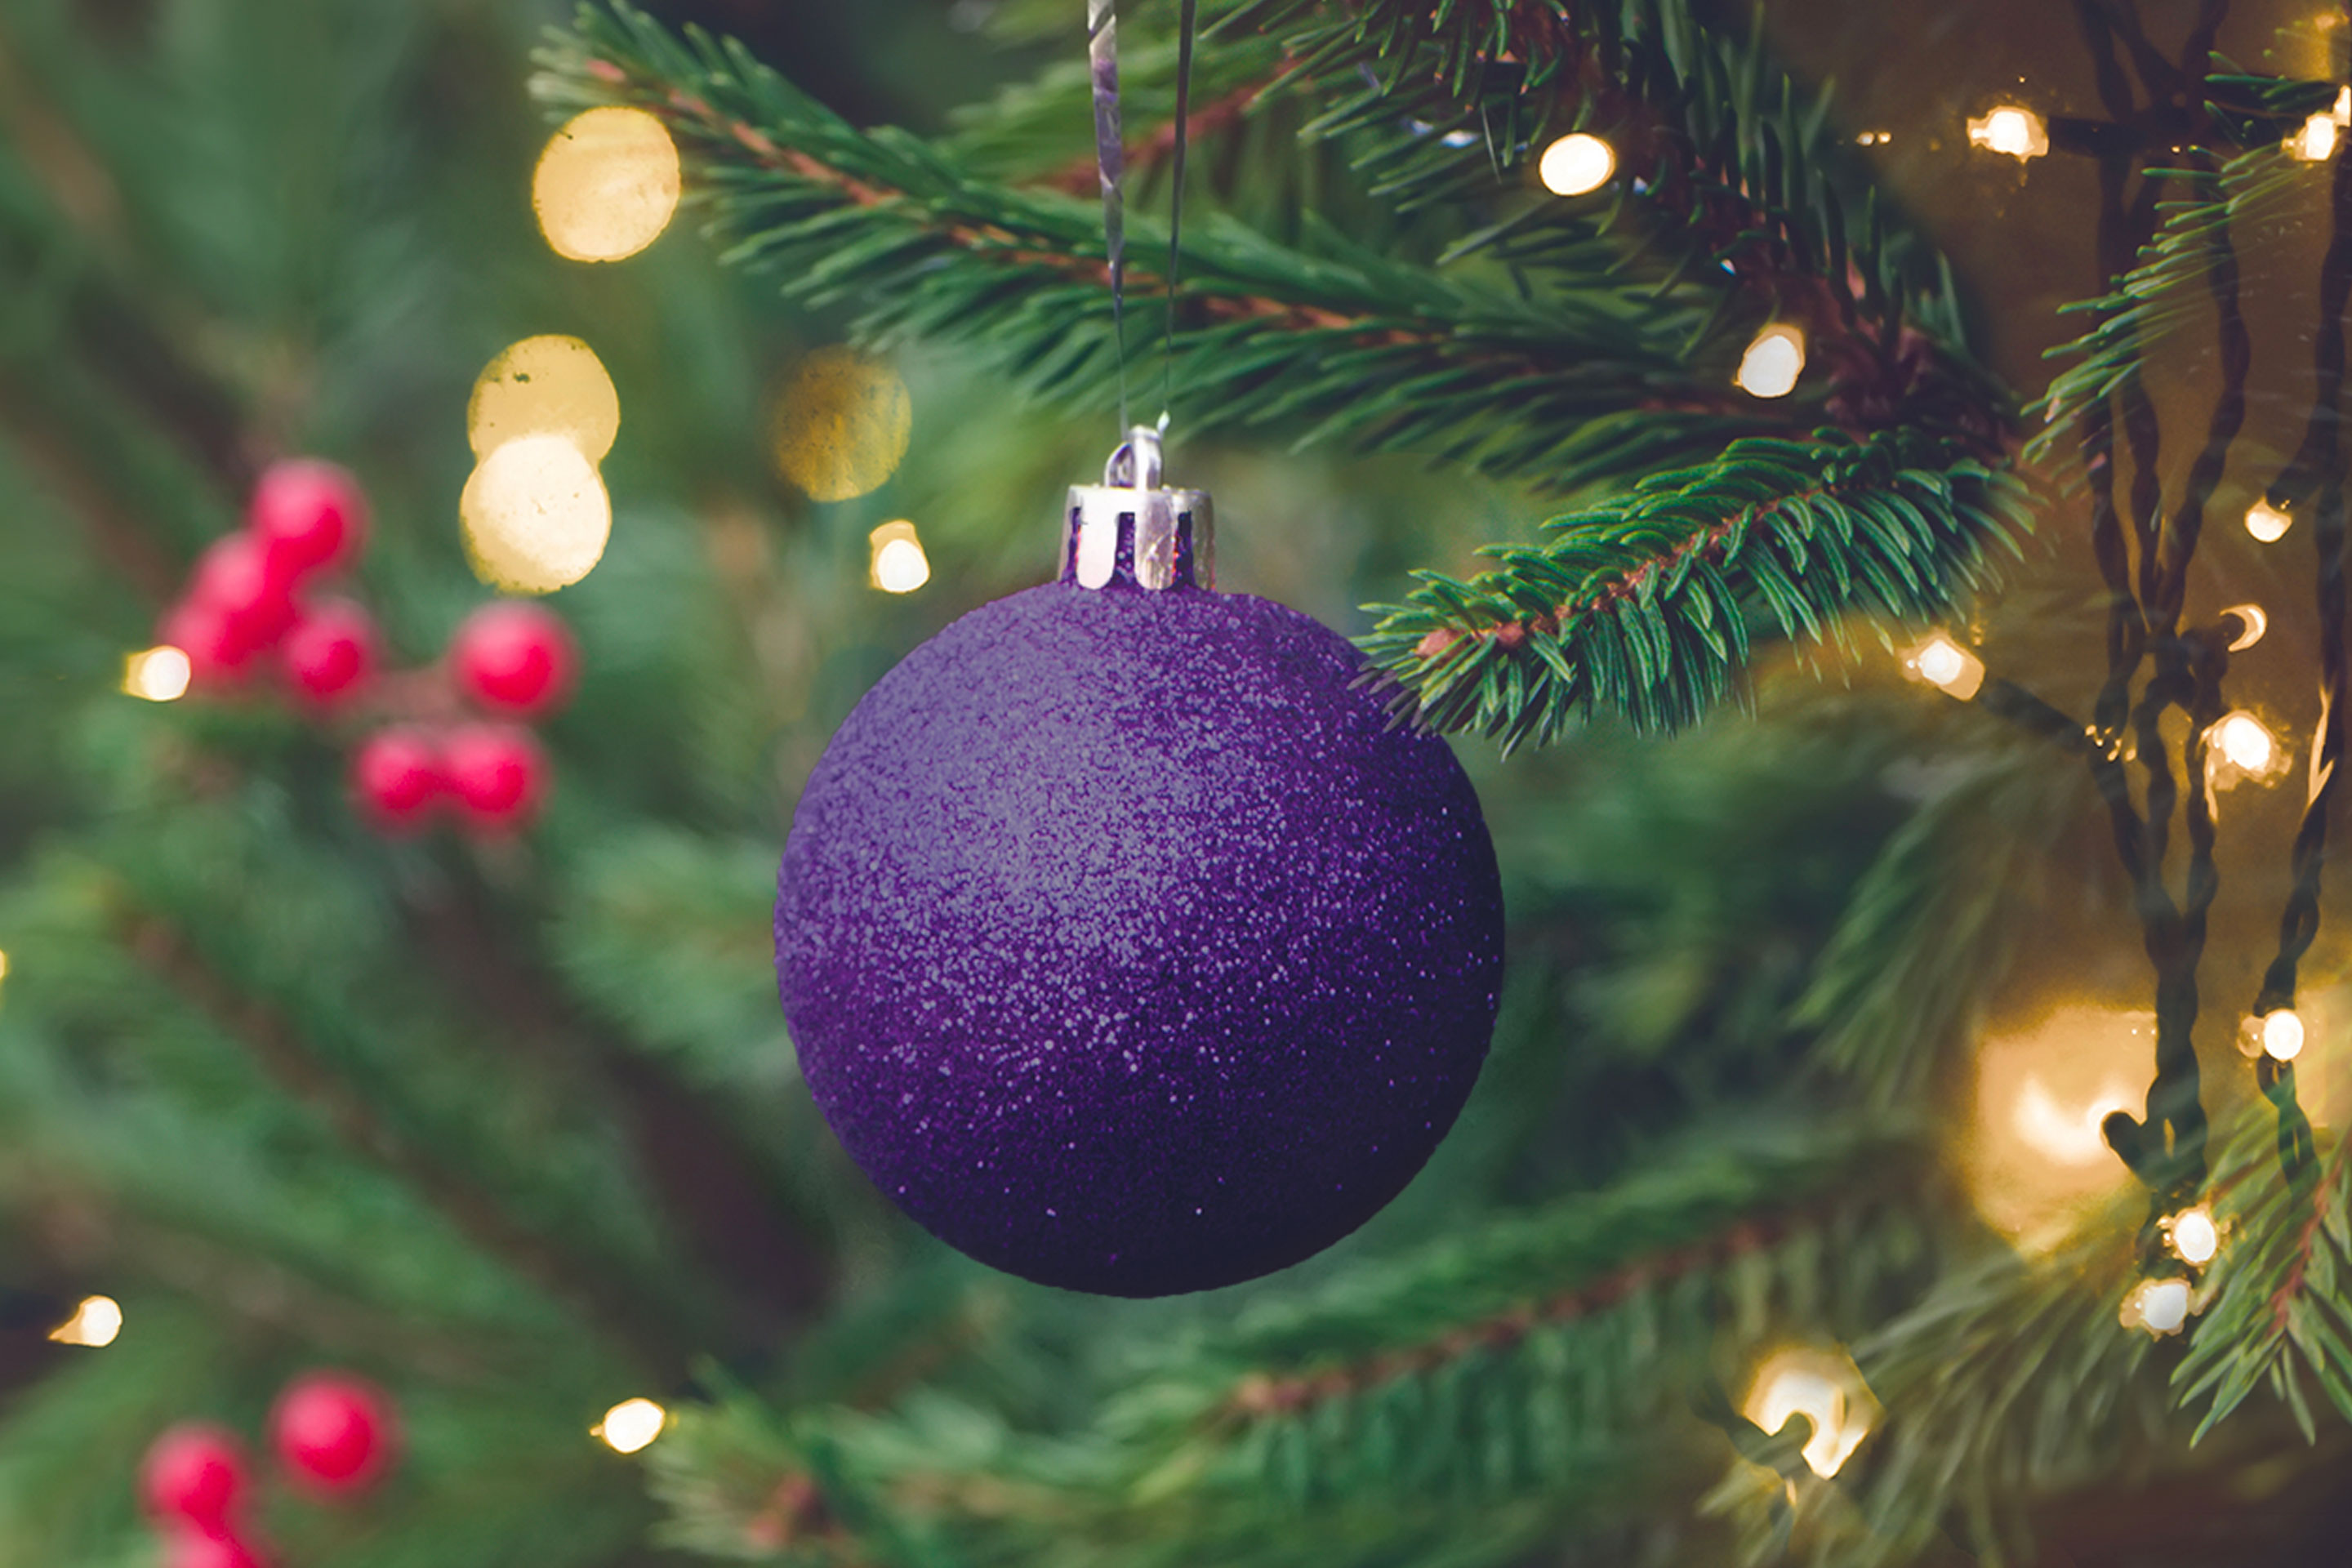 An image of a Christmas tree to represent holiday season